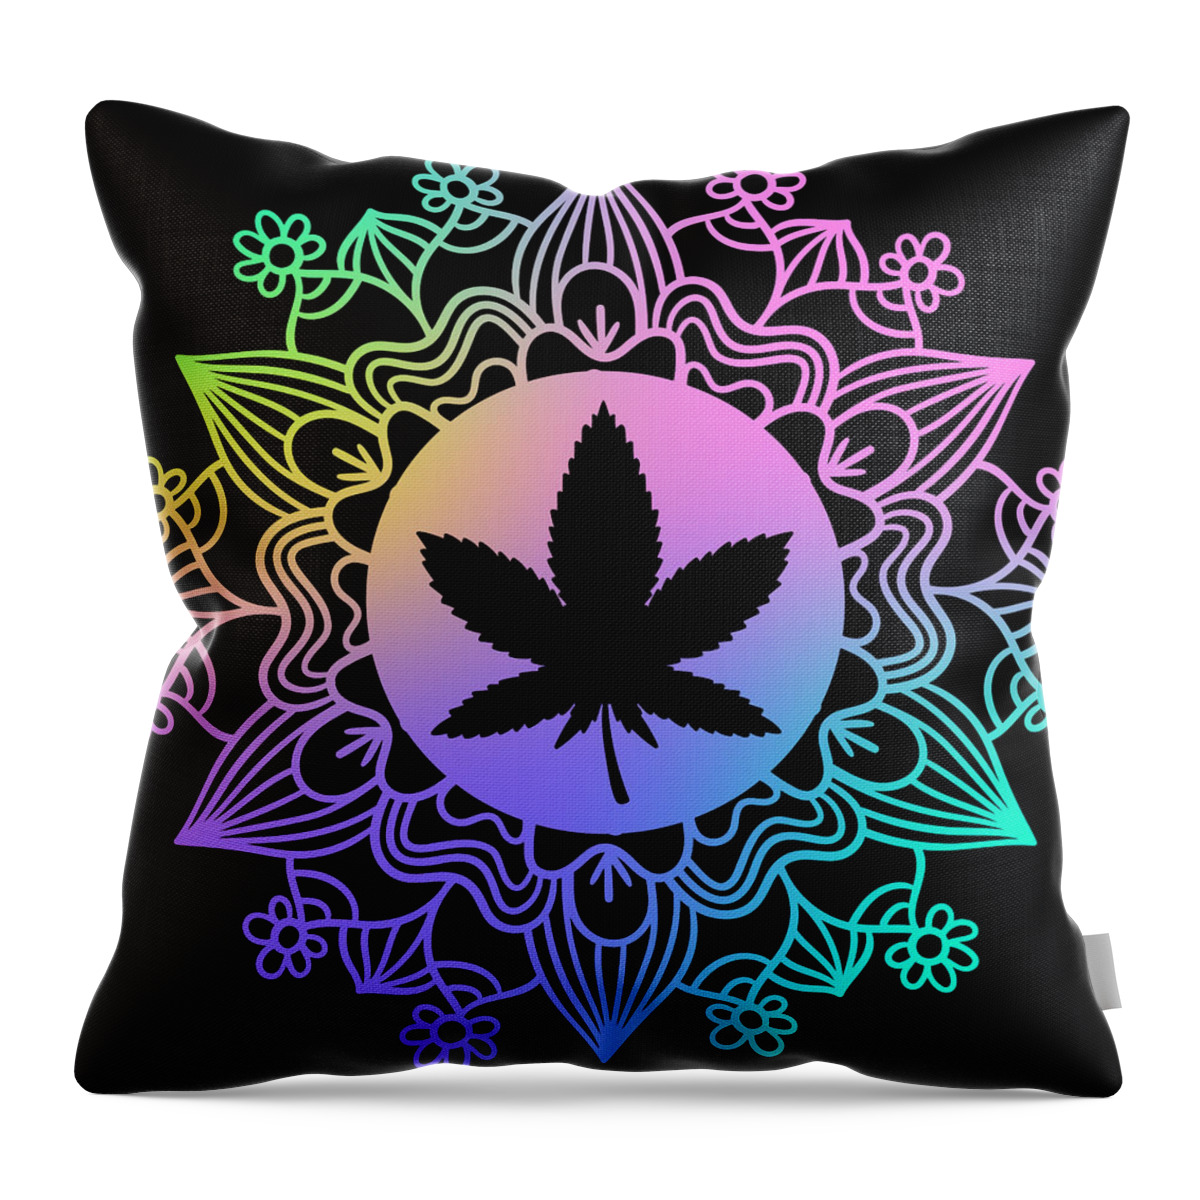 Mandala Throw Pillow featuring the digital art Cannabis Mandala by Lisa Pearlman